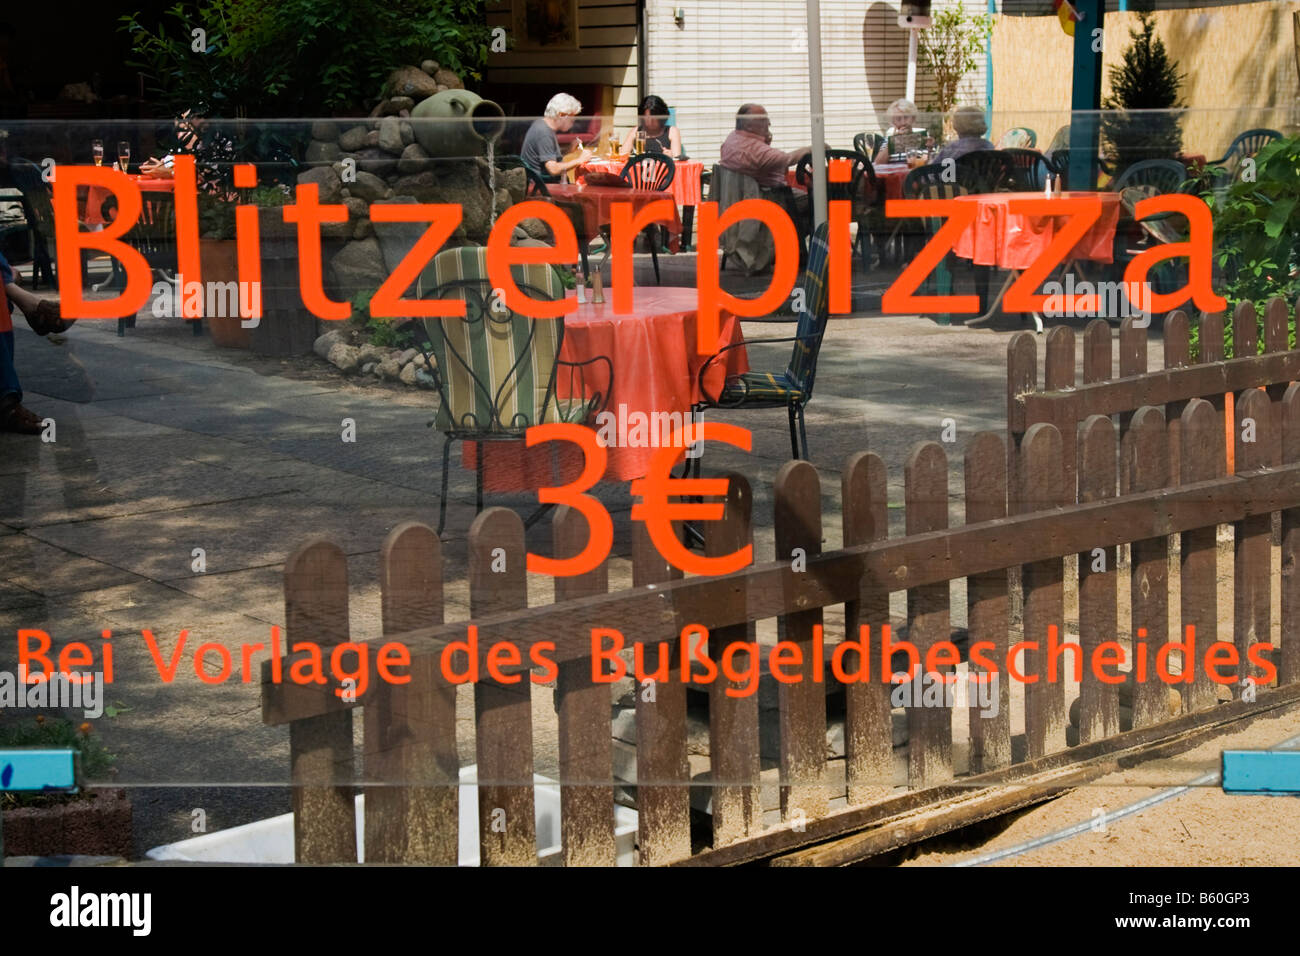 Blitzerpizza, Blitz Pizza Restaurant Werbung Stockfoto